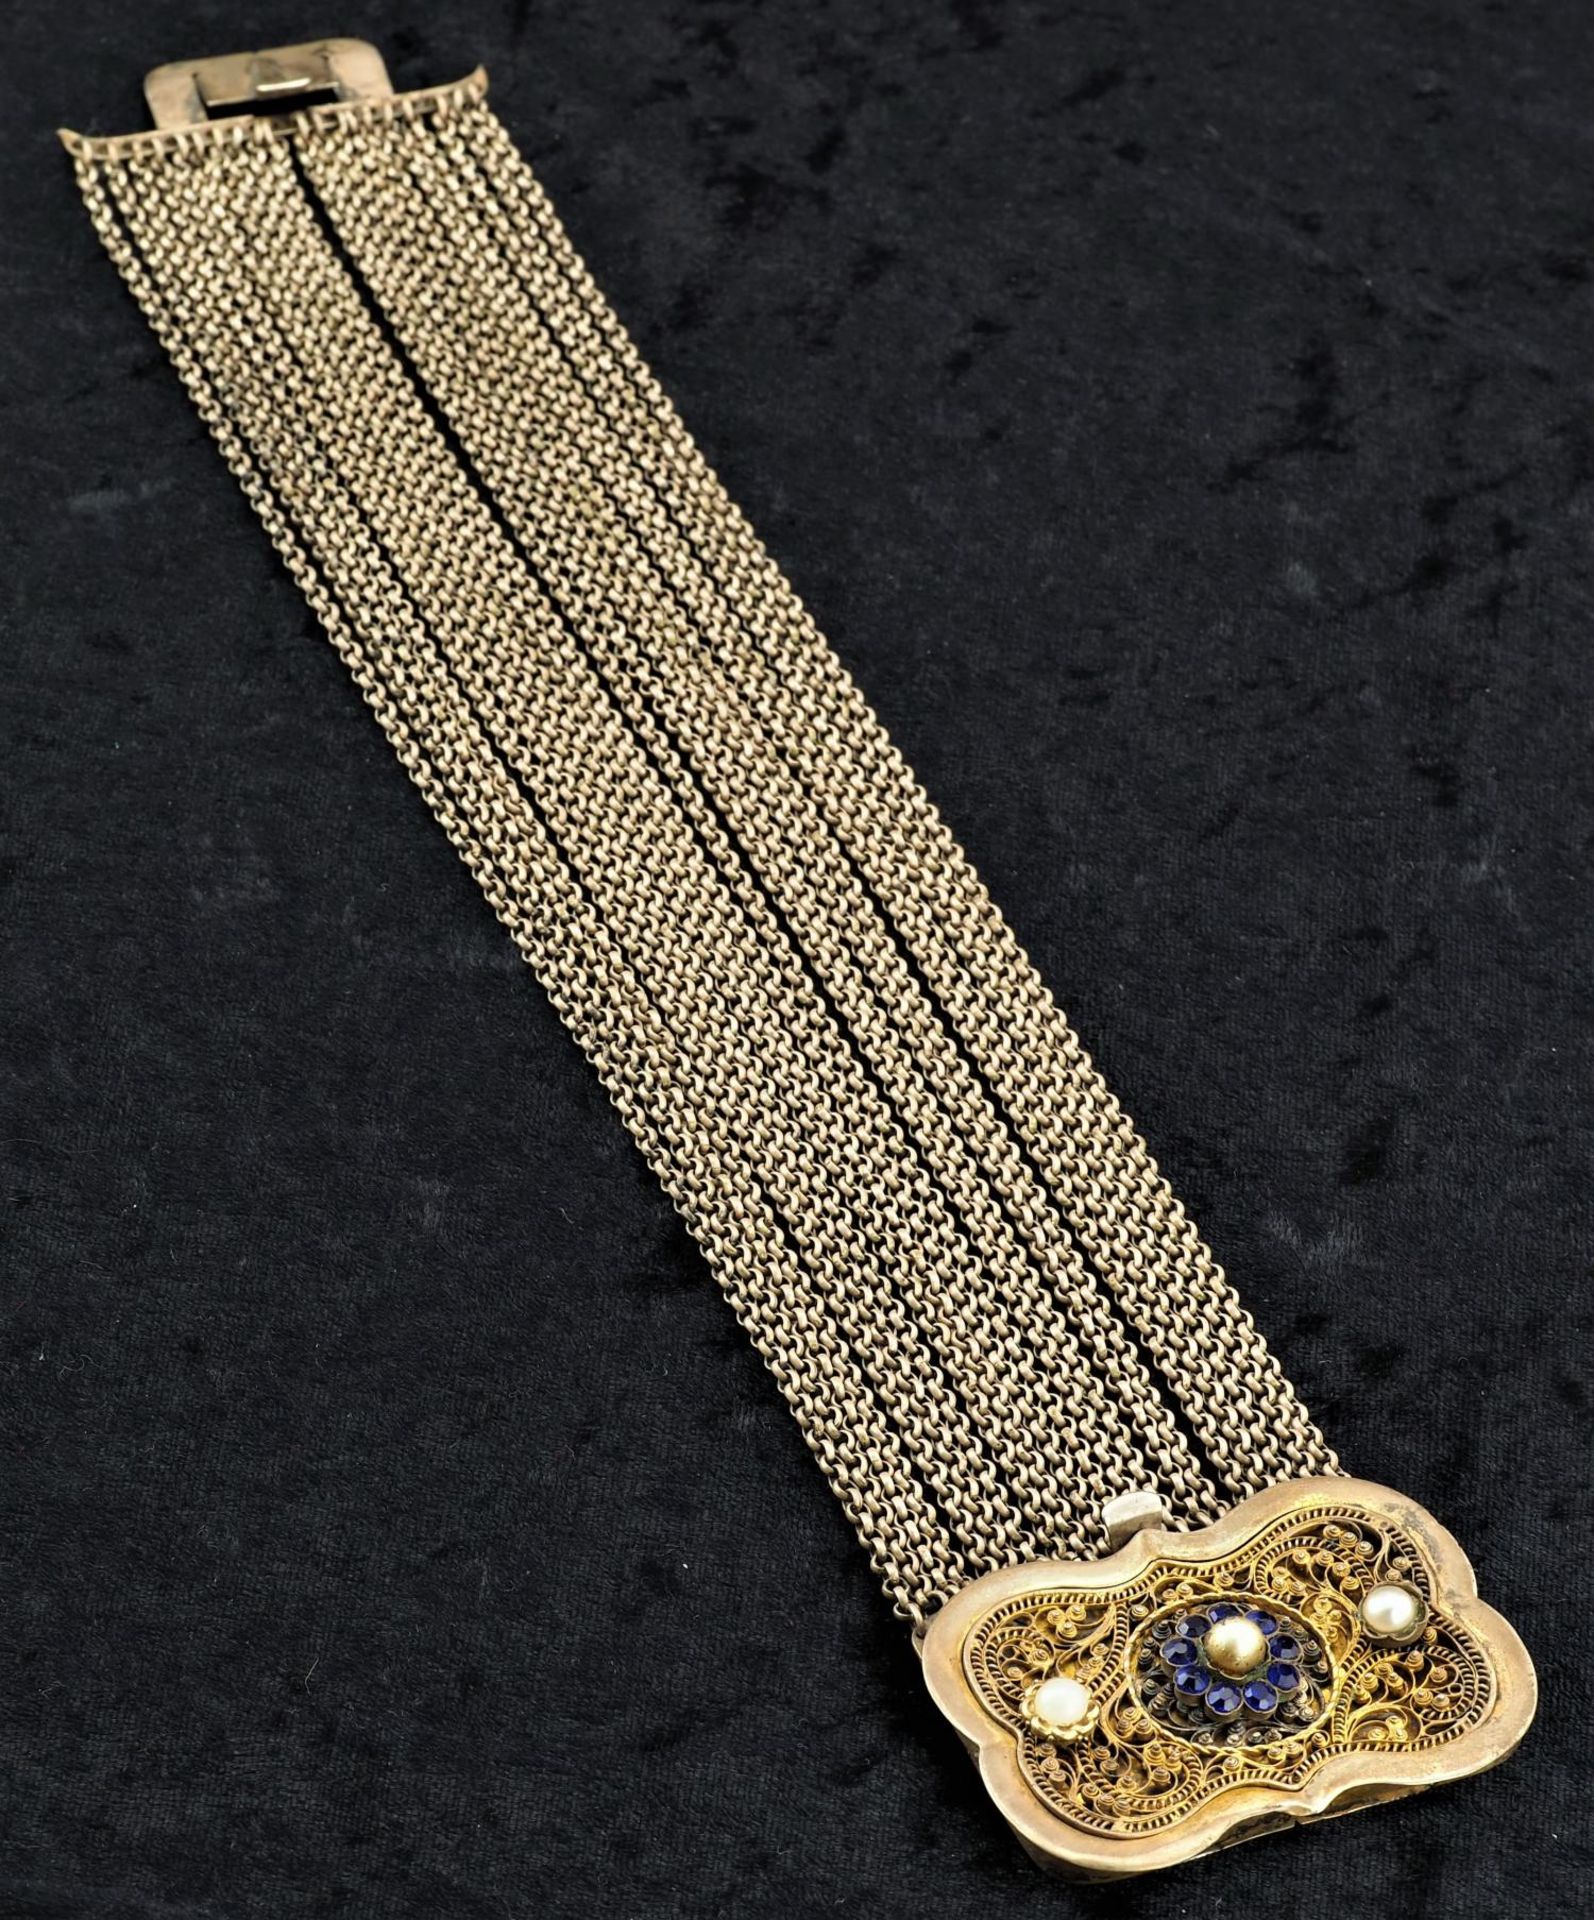 Biedermeier choker necklace around 1850, probably imperial Austria - Image 3 of 7